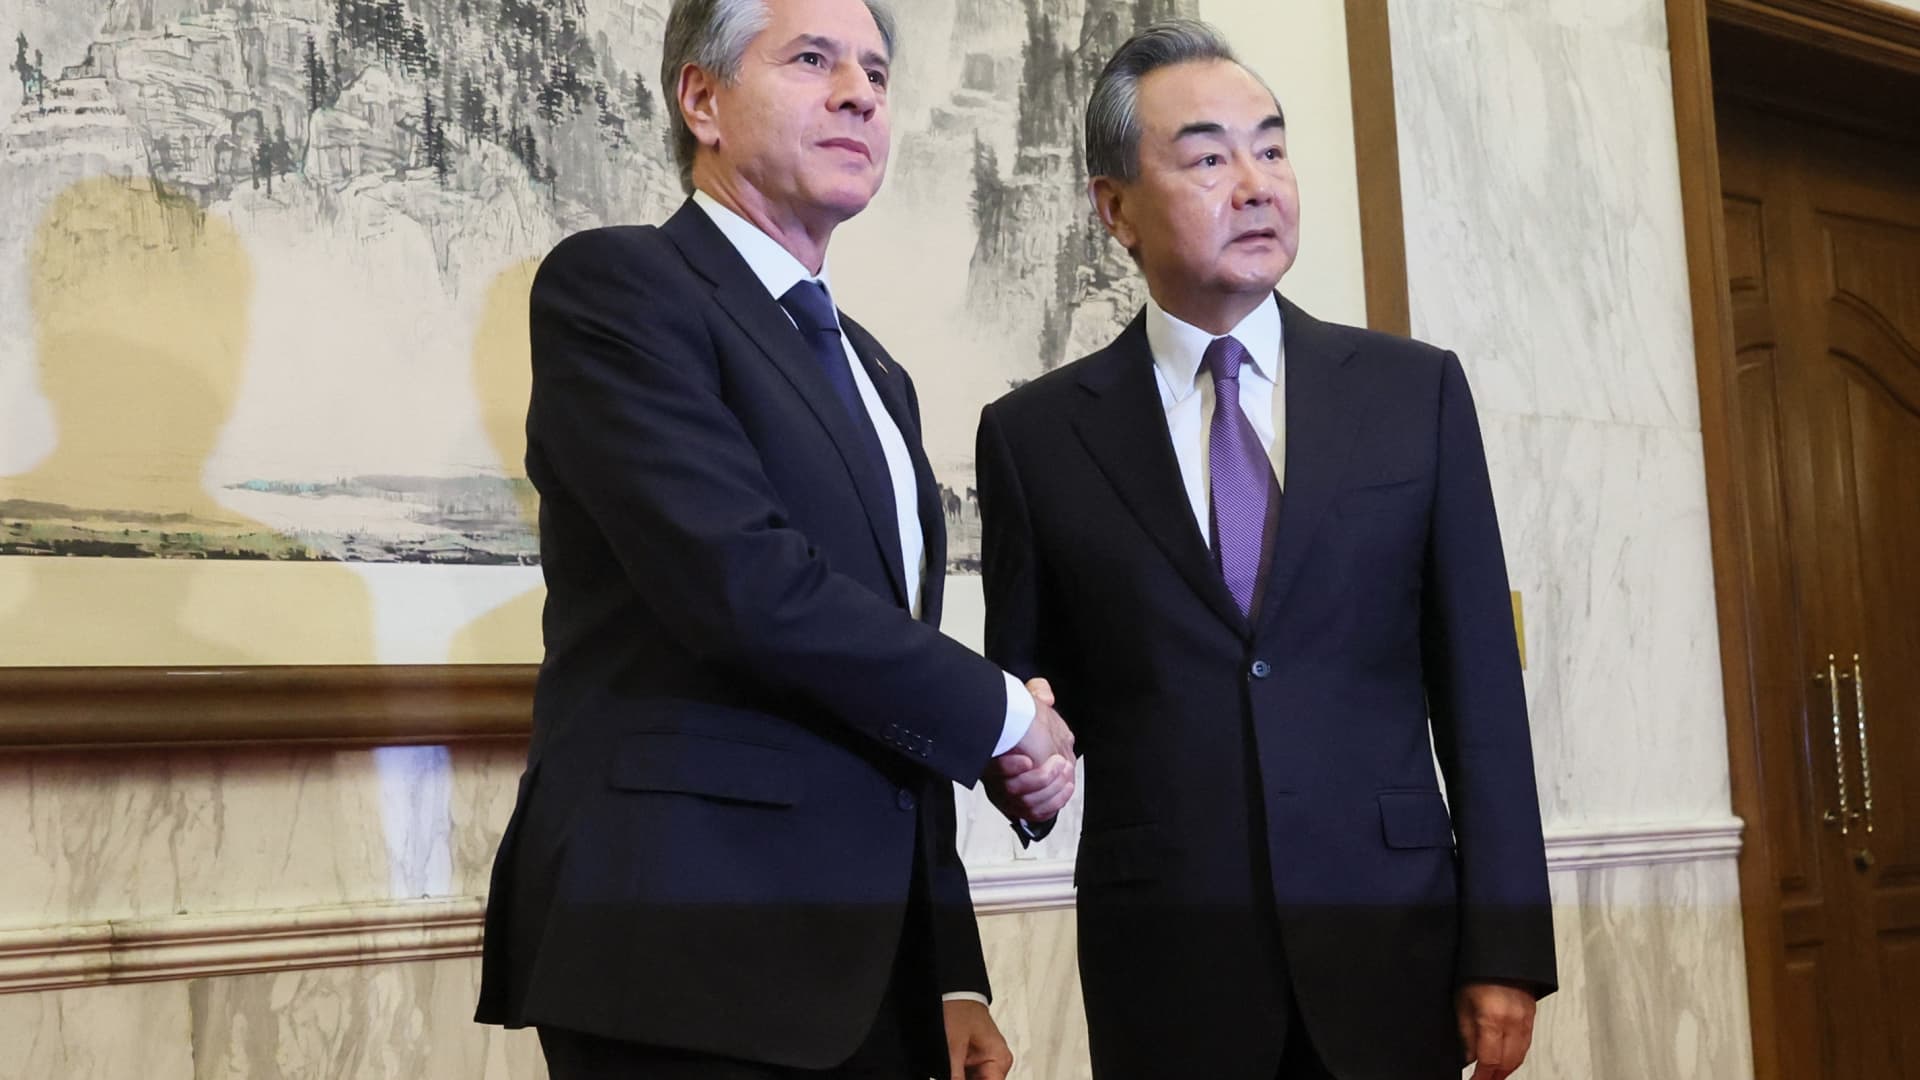 Blinken tells Wang Yi both sides must avoid miscalculations